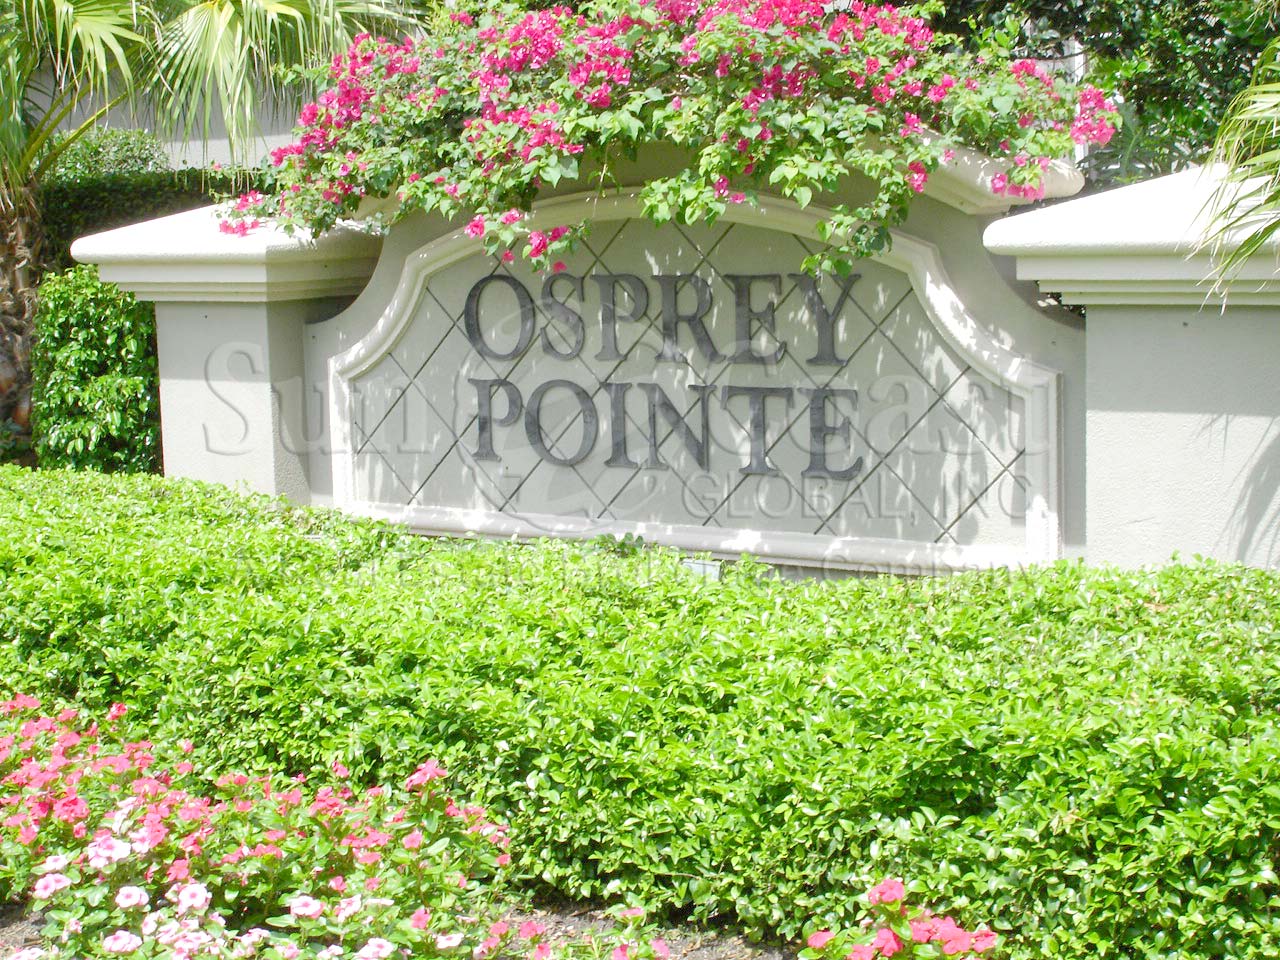 Osprey Pointe entrance sign